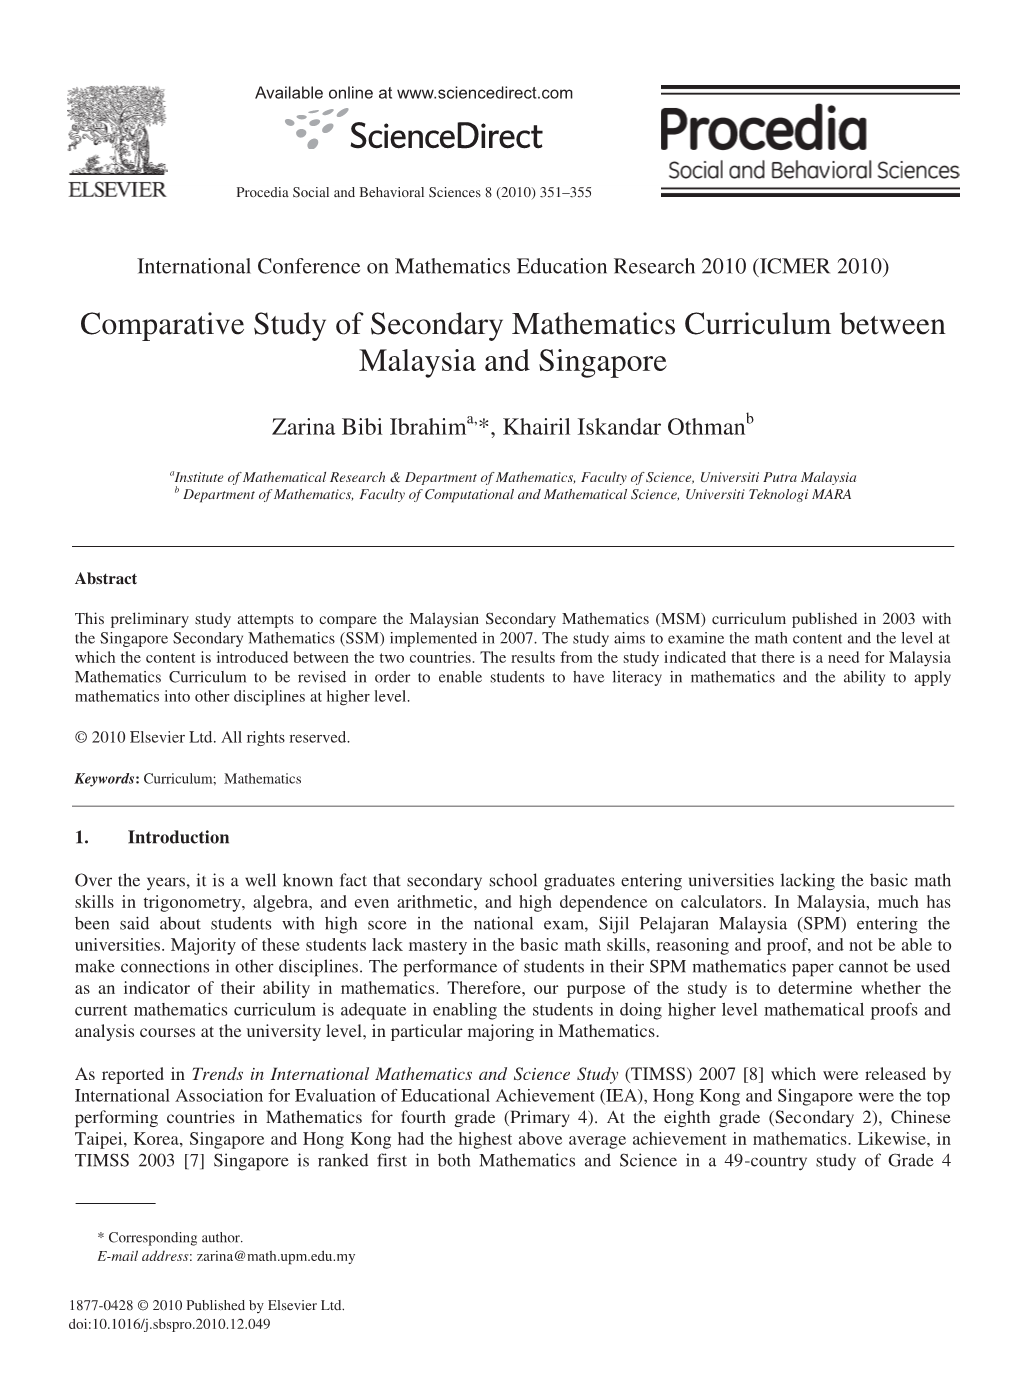 Comparative Study of Secondary Mathematics Curriculum Between Malaysia and Singapore